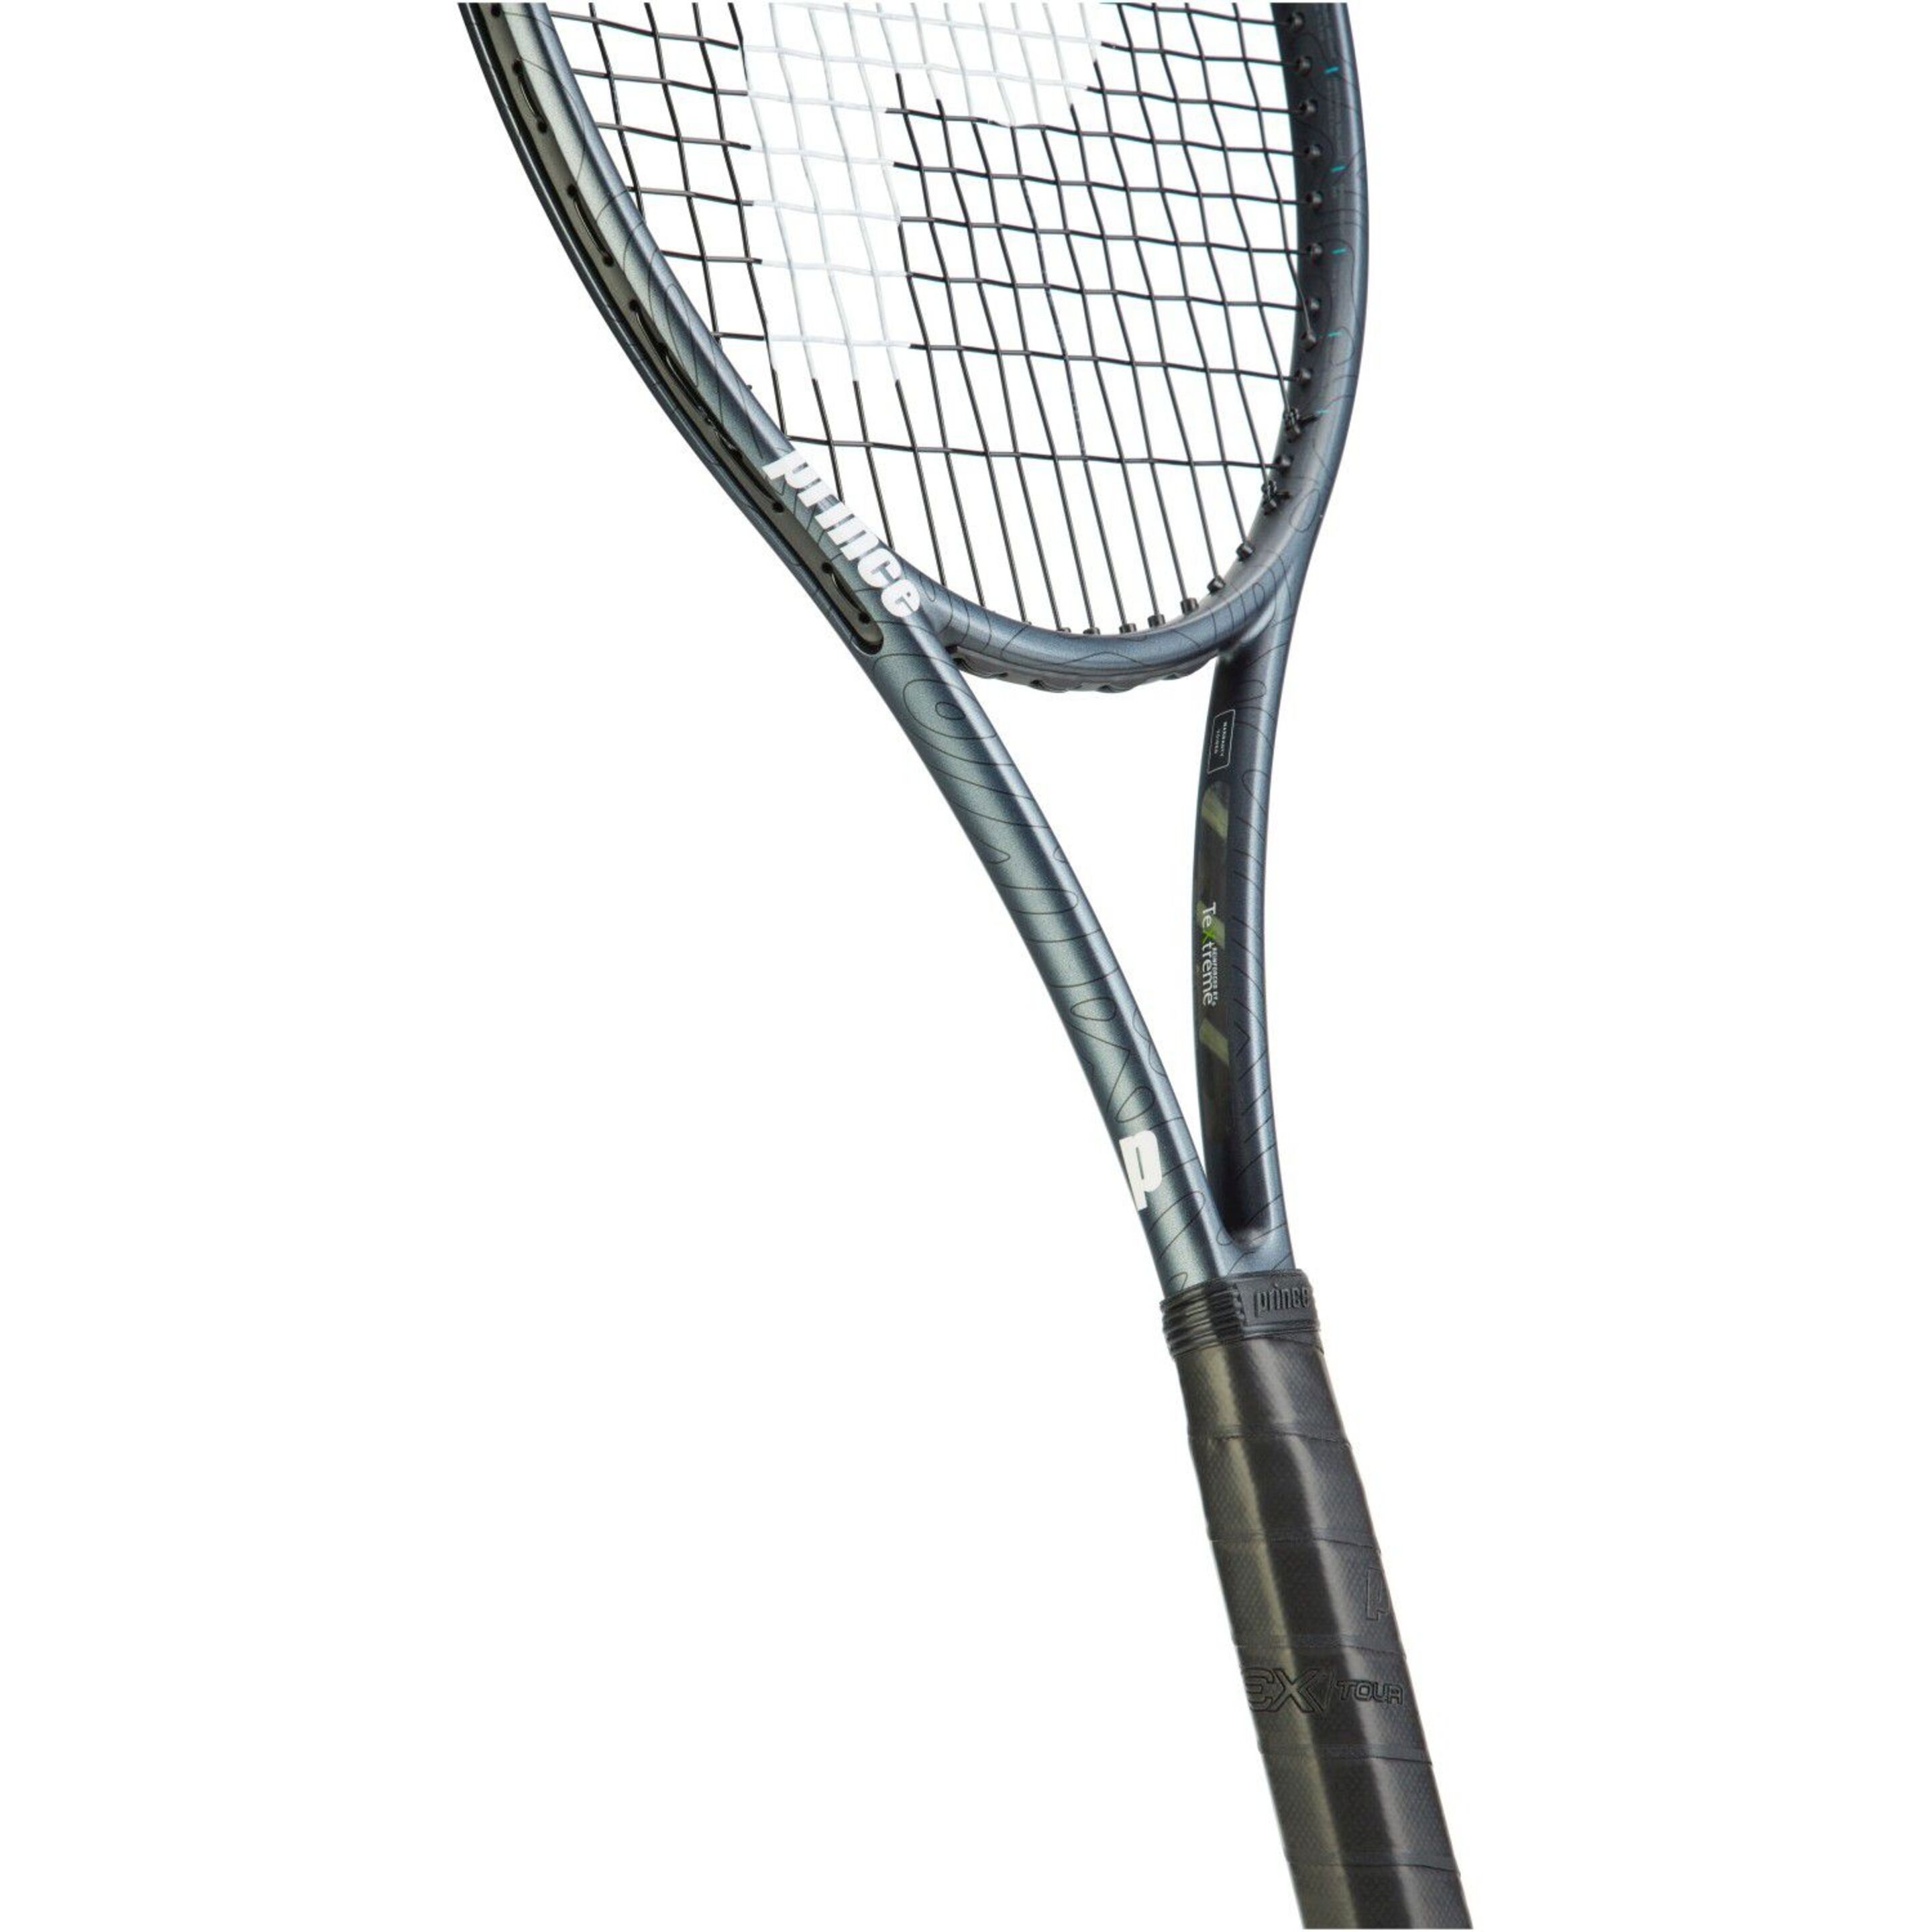 Raqueta De Tenis Prince Txt2.5 Phantom 100x (18x20) 320 G (sin Encordar Y Sin Funda)